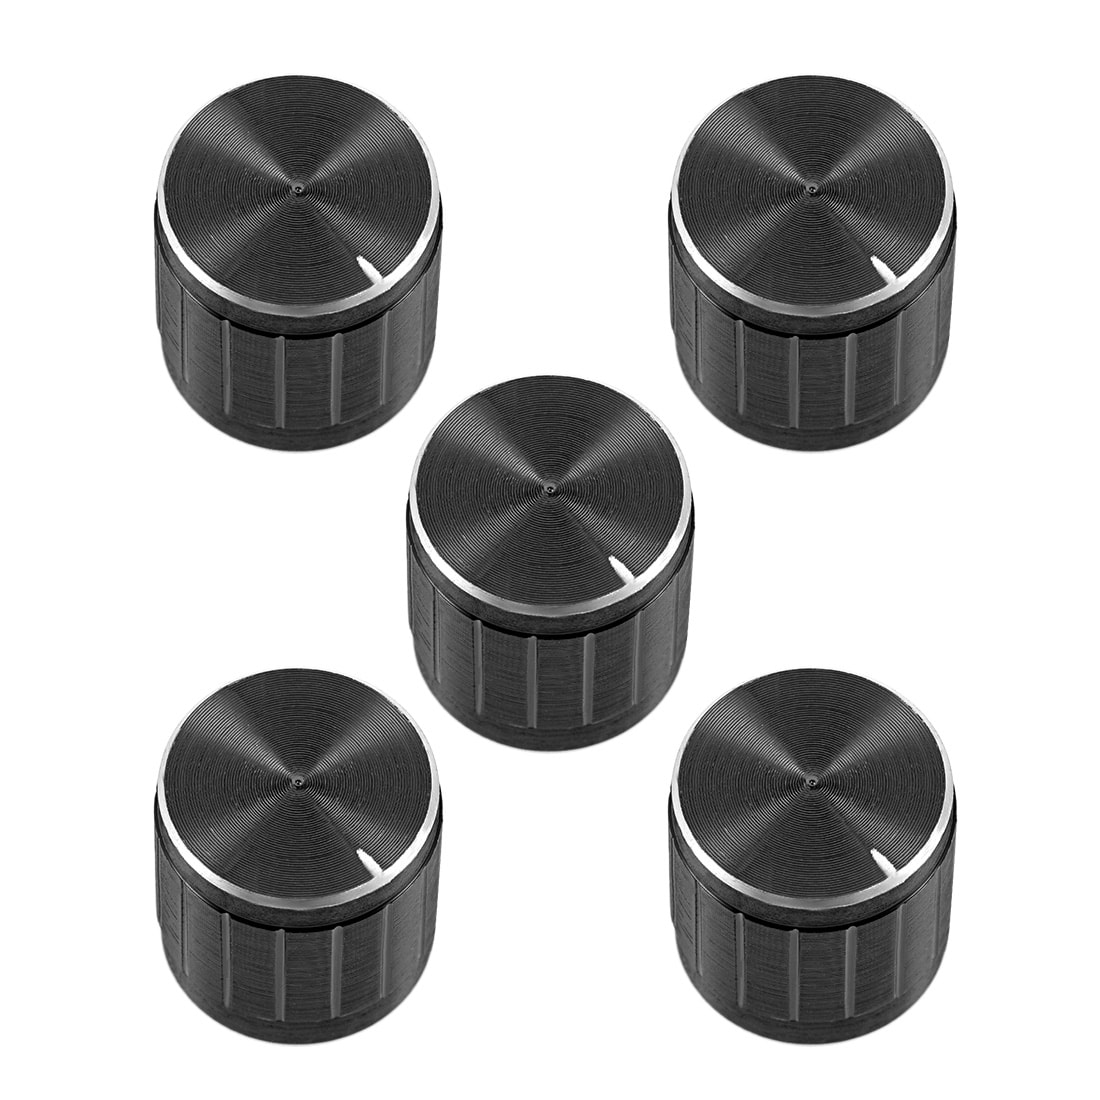 Black Potentiometer Knob 17mm Shaft Aluminum Knurled Pot 6mm Control Caps 